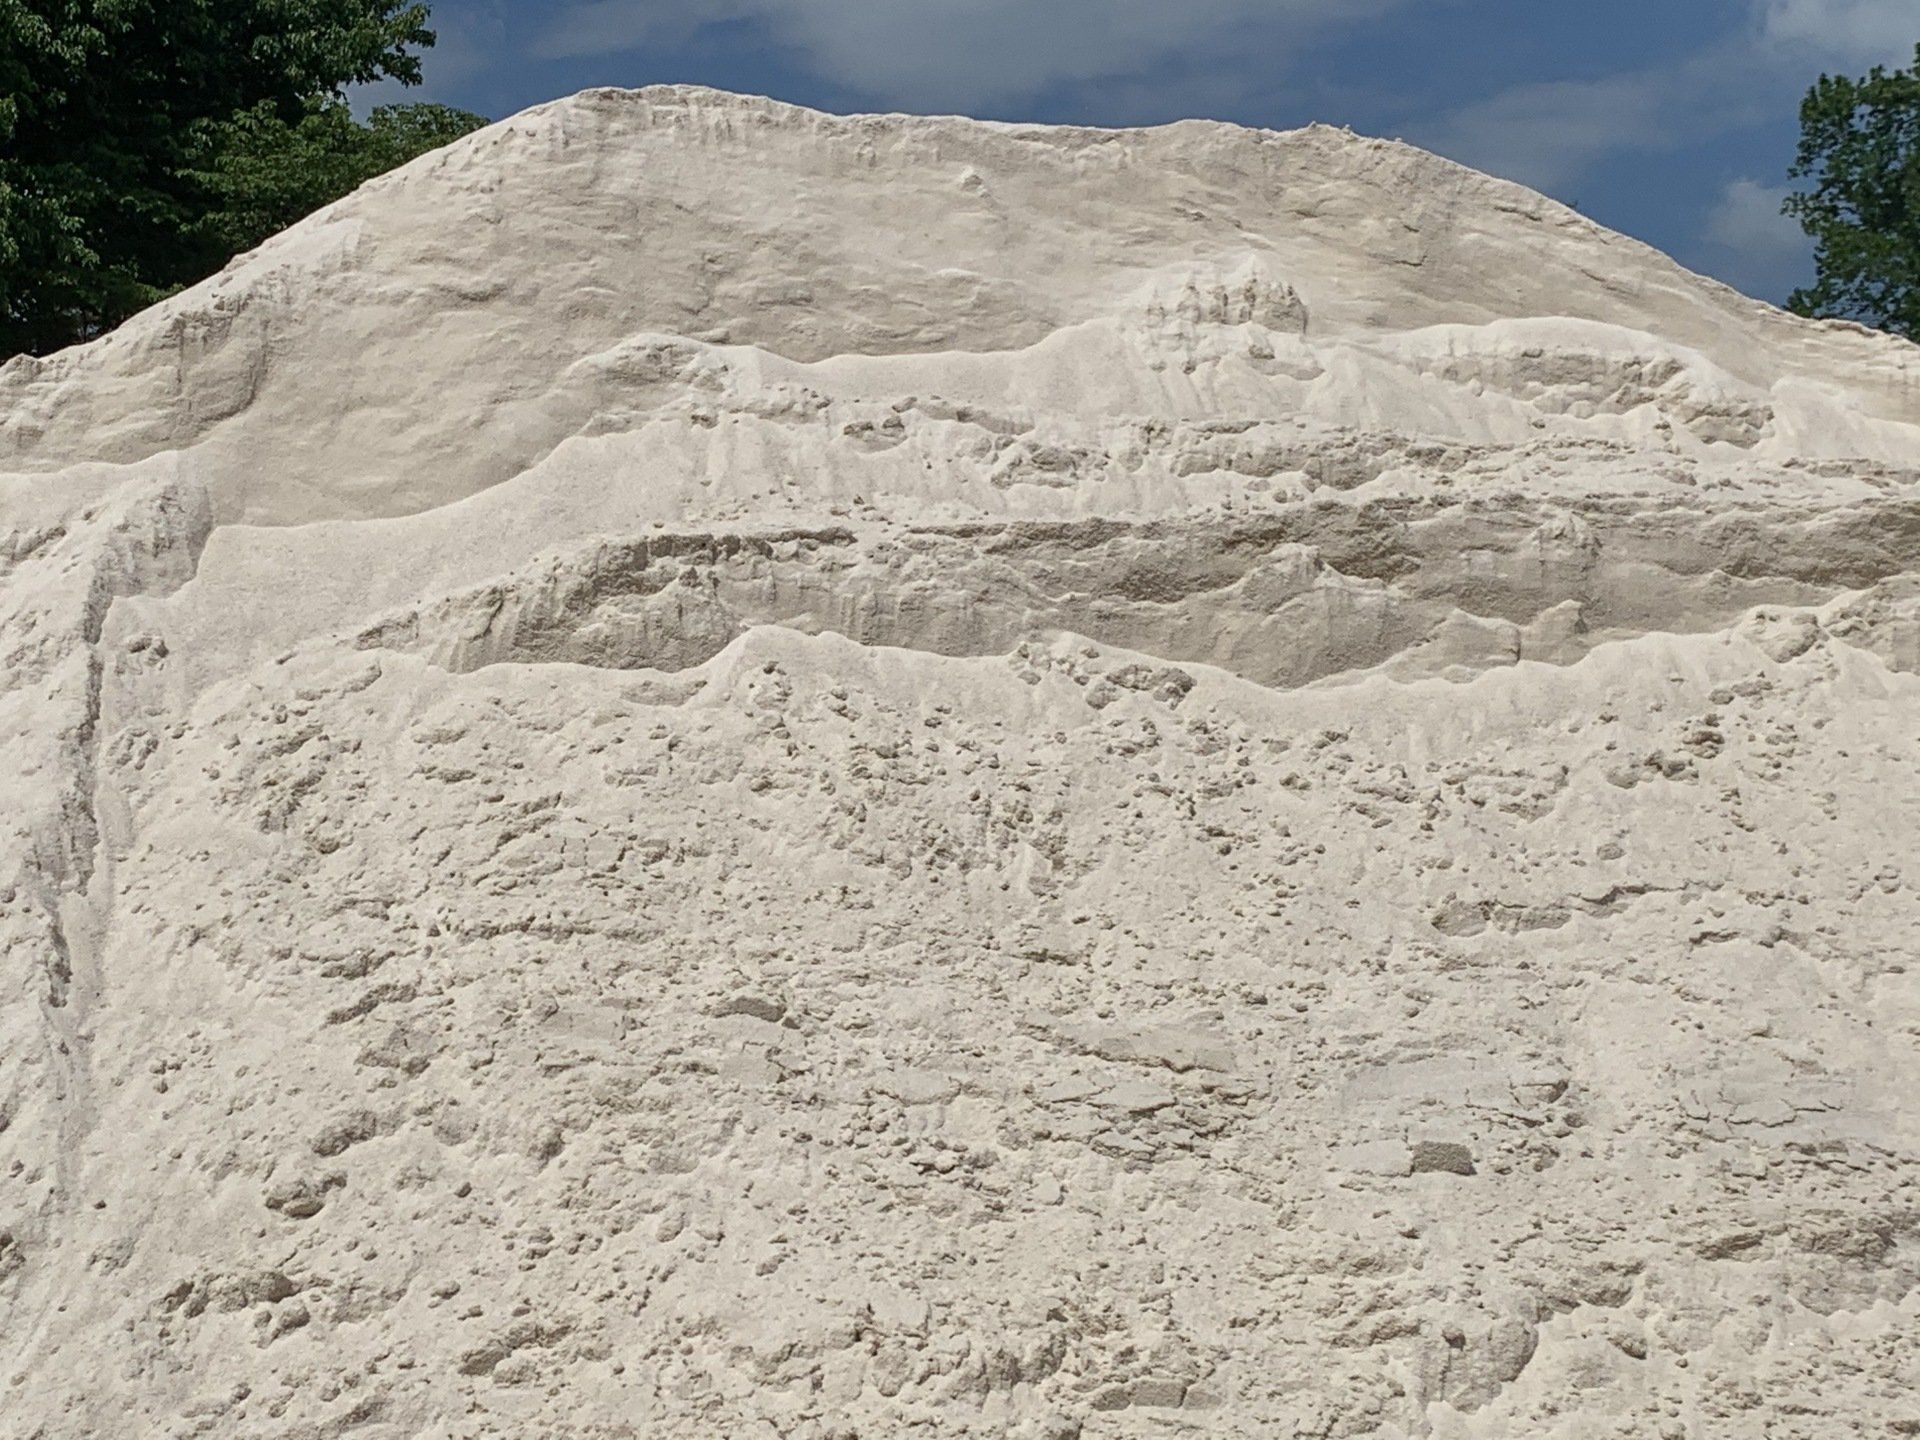 Sand for Sale Winston Salem, NC